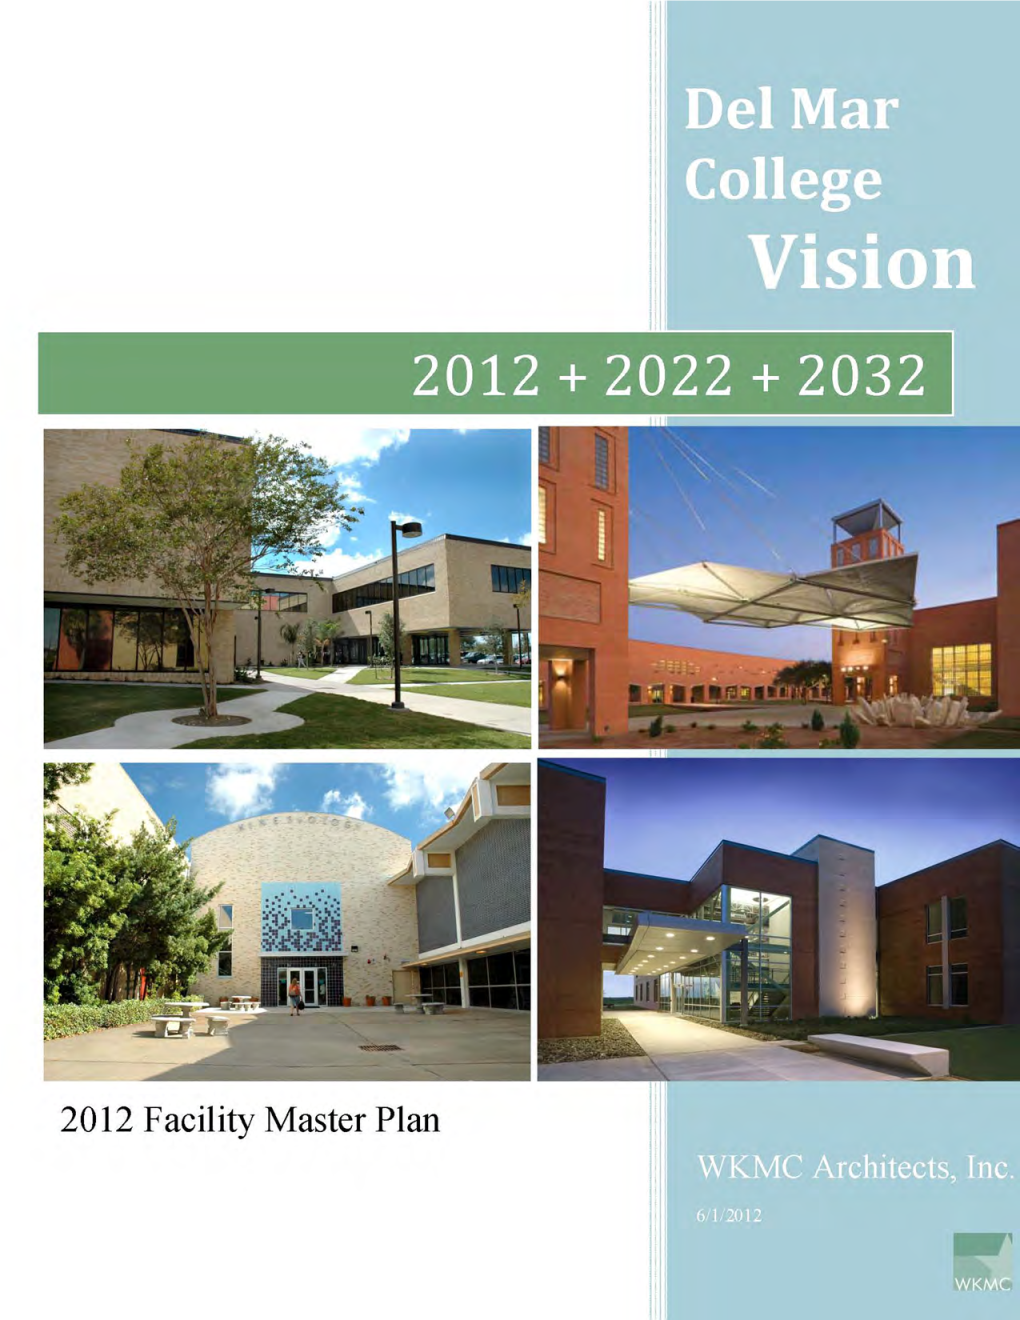 Del Mar College 2012 Facility Master Plan